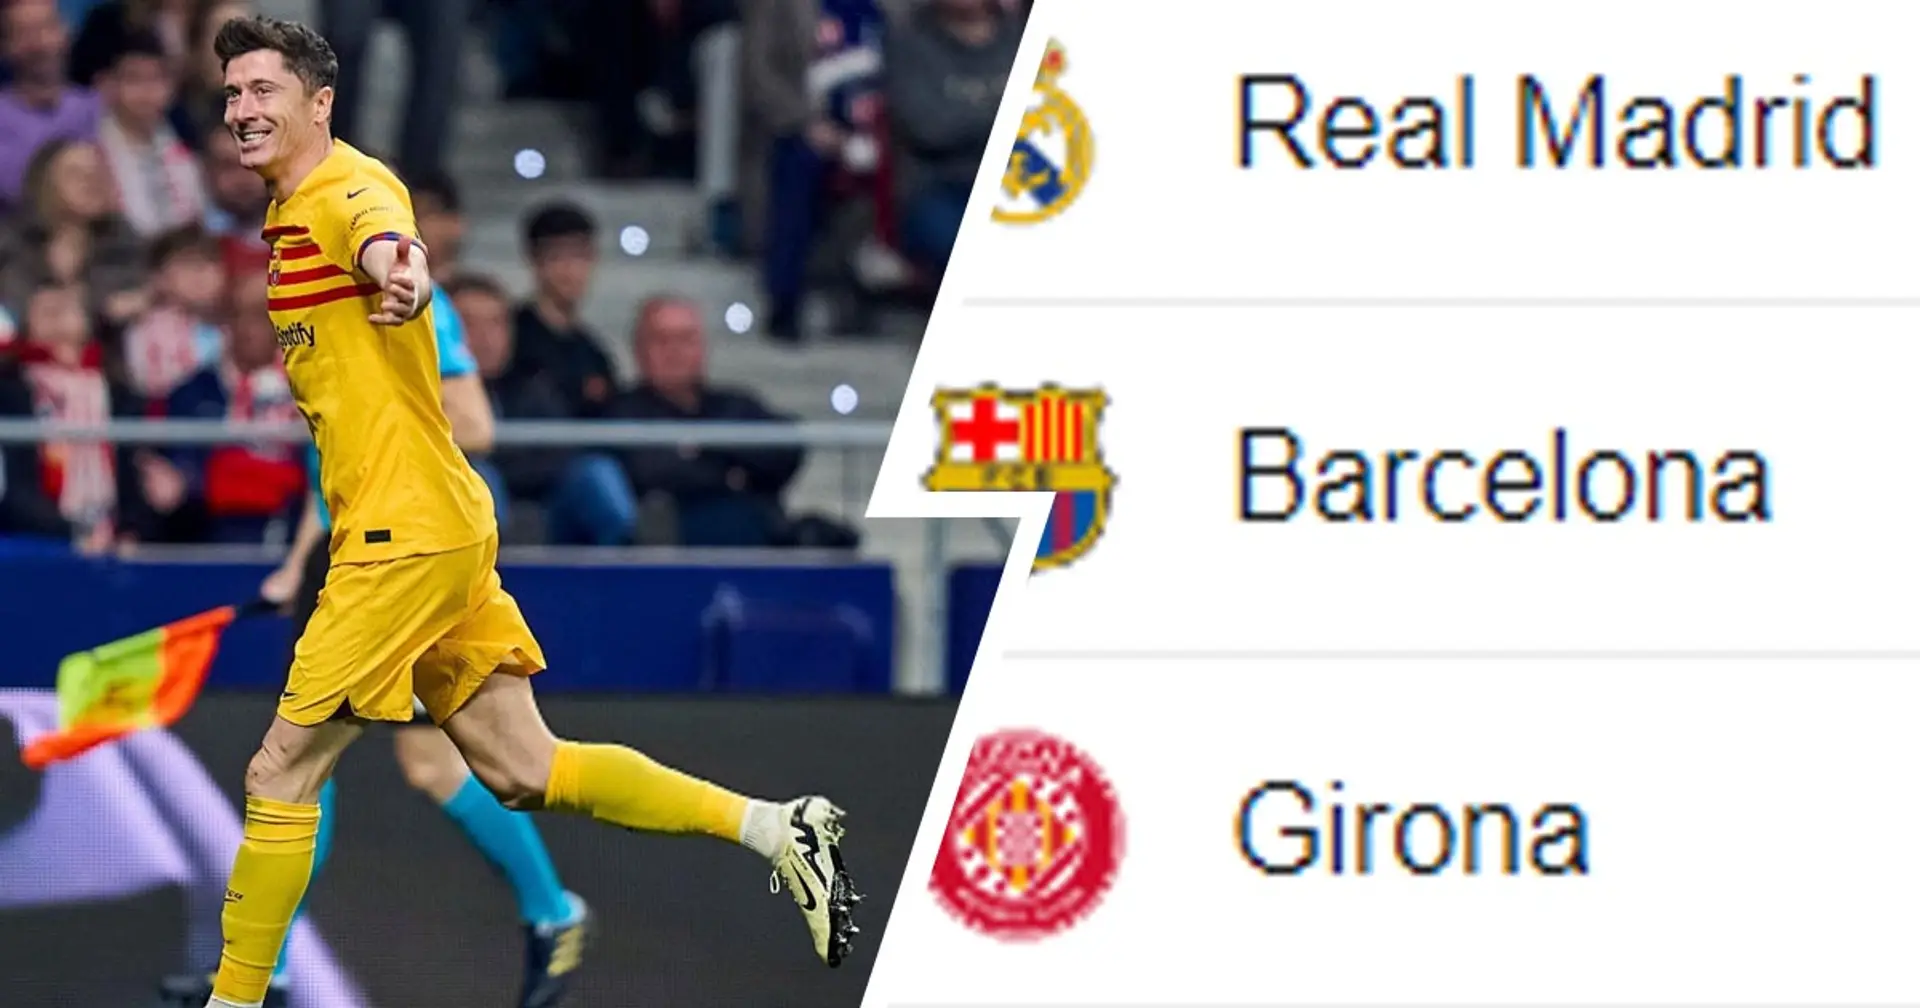 Barca leap over Girona: how La Liga table looks like after huge Atletico Madrid win